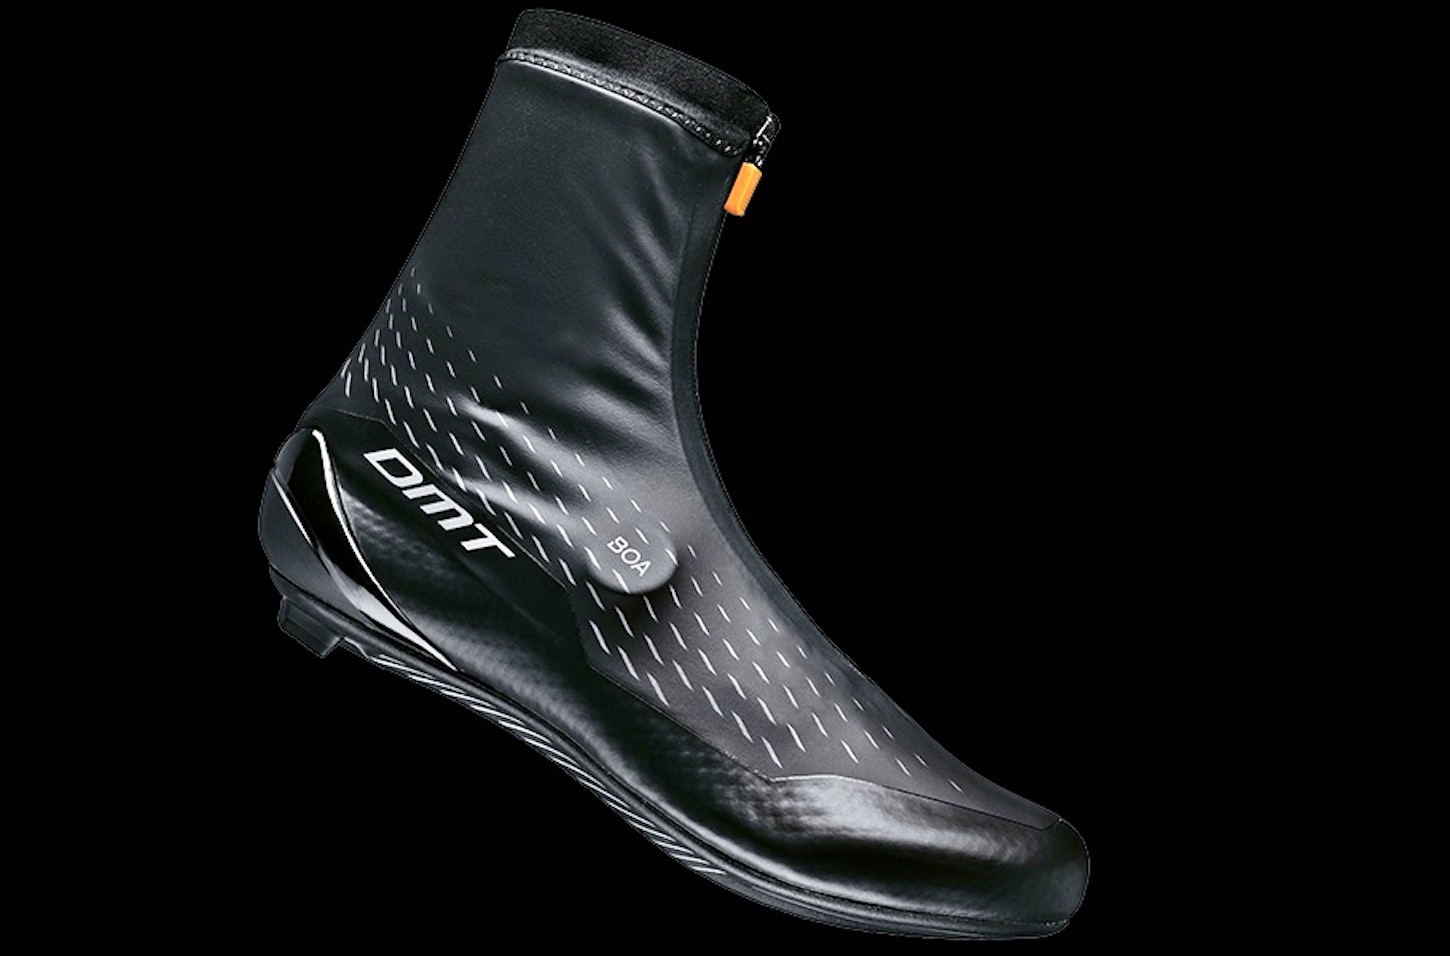 CapoVelo.com - DMT Debuts New WKR1 Winter Road Shoe